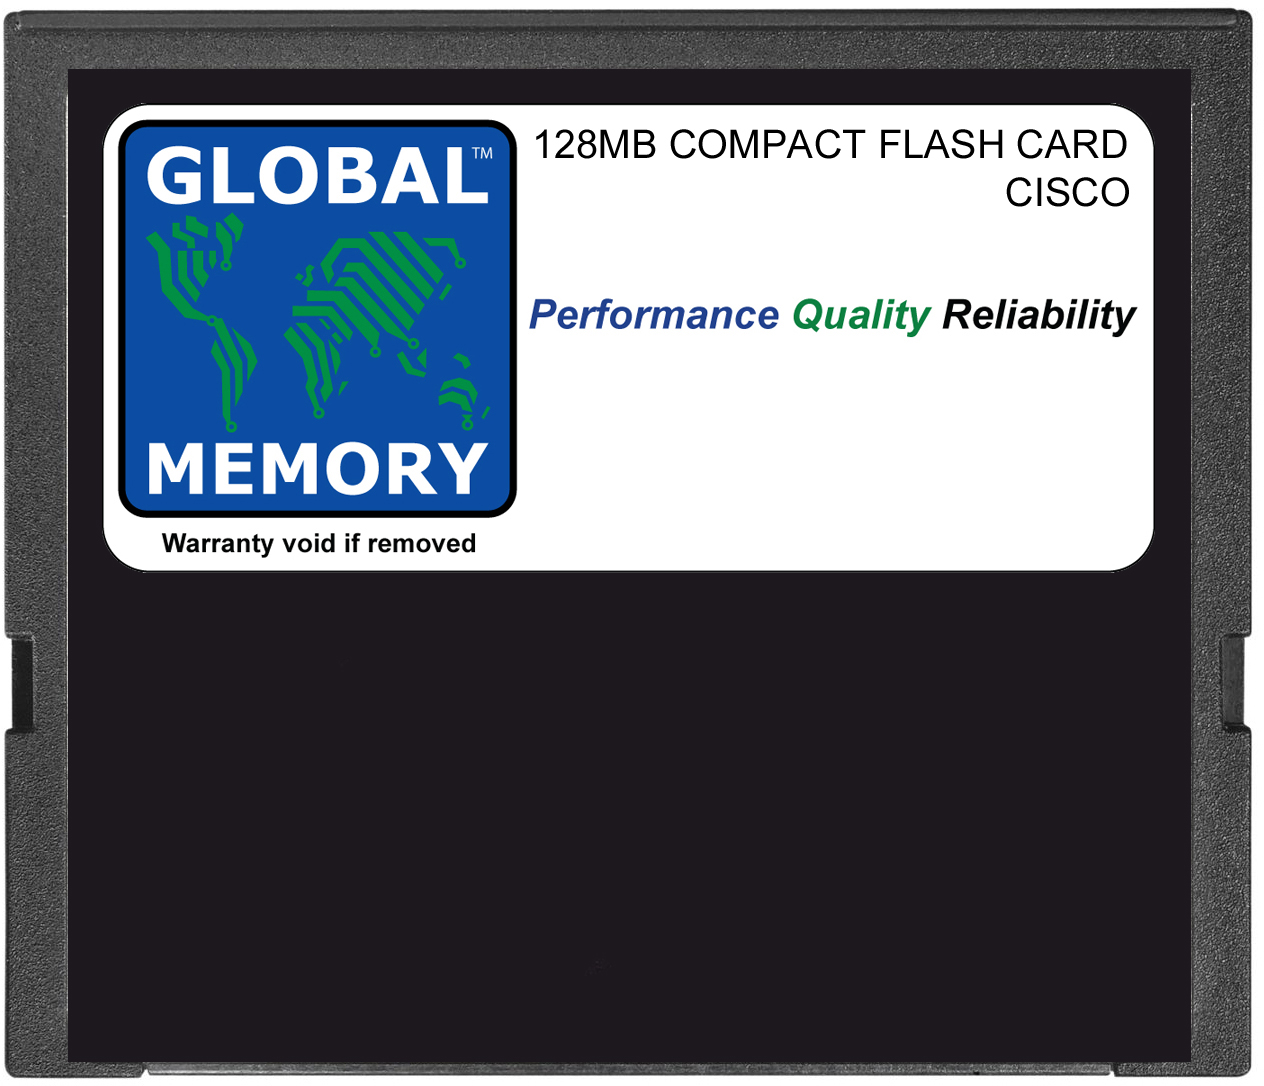 128MB COMPACT FLASH CARD MEMORY FOR CISCO AS5350XM / AS5400XM UNIVERSAL GATEWAY (MEM-128CF-AS5XM)